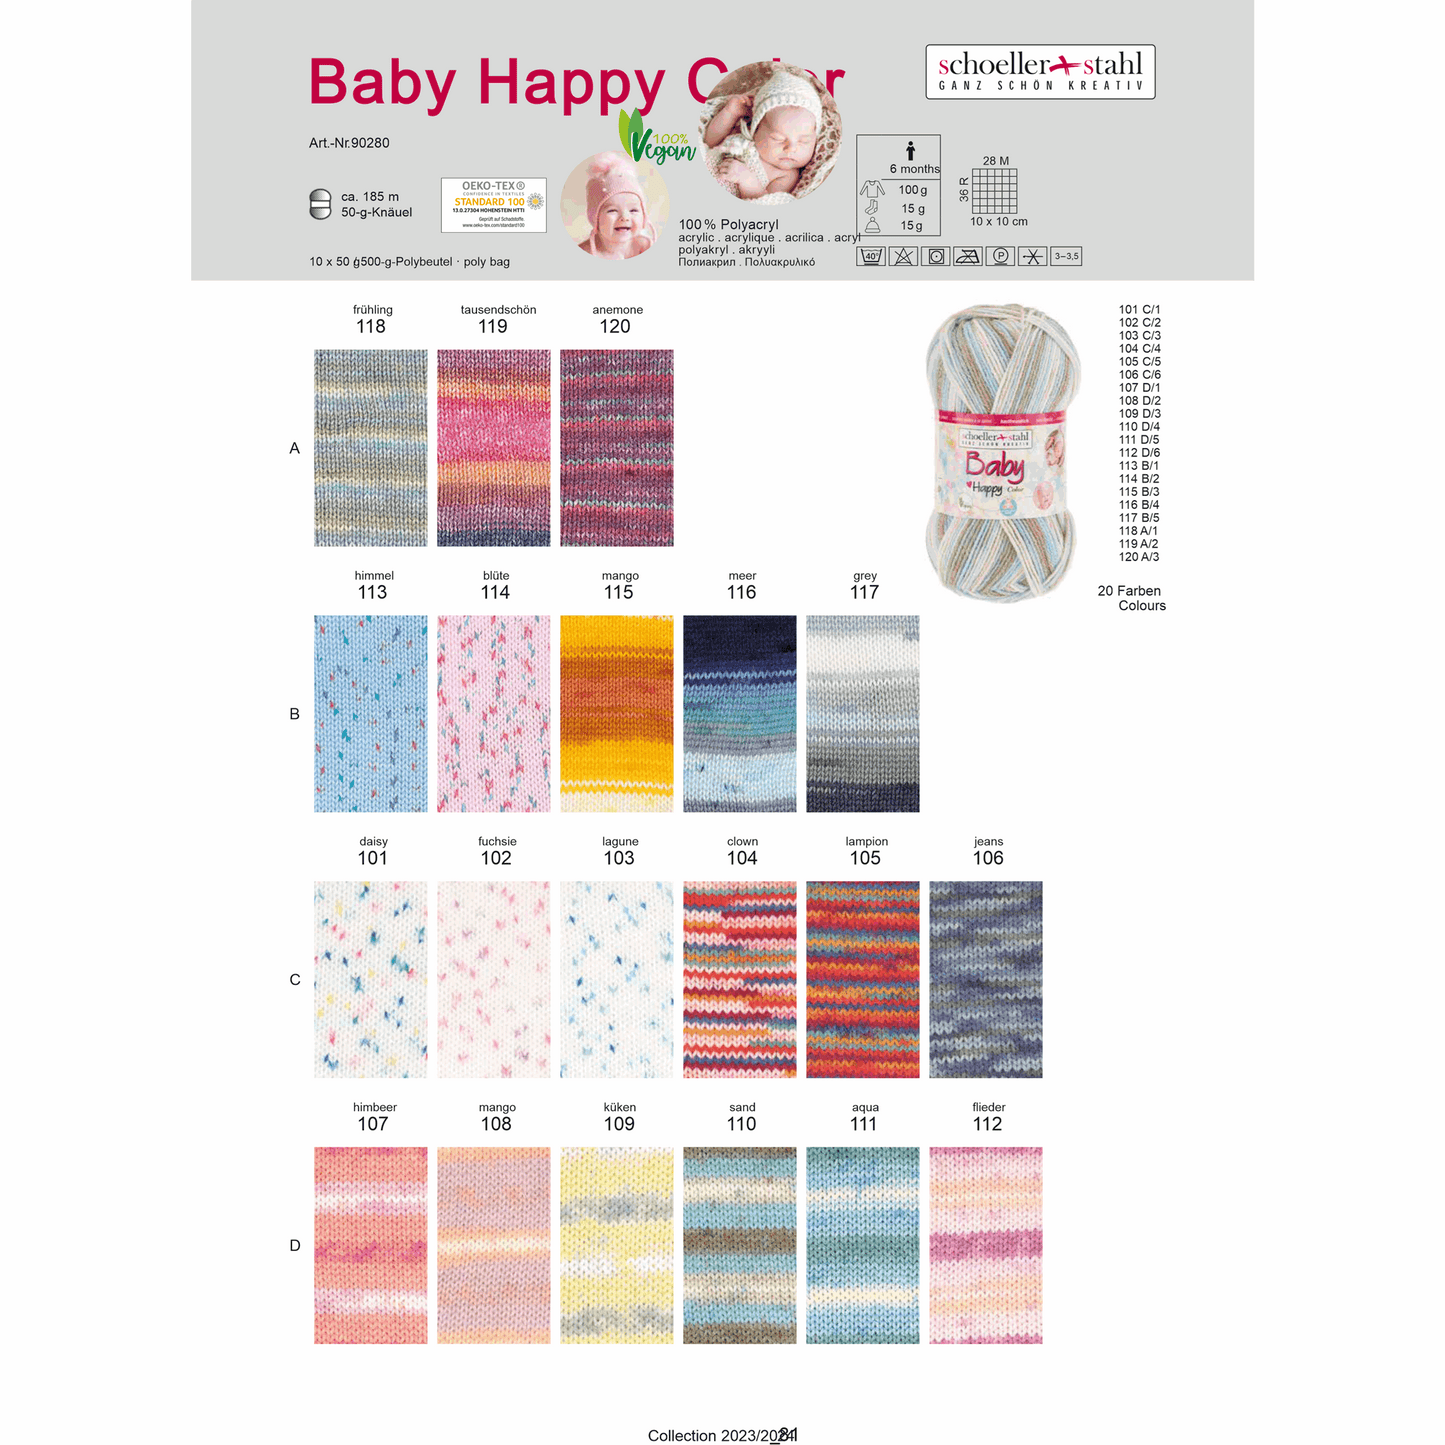 Baby happy color 50g, 90280, Farbe 109, küken